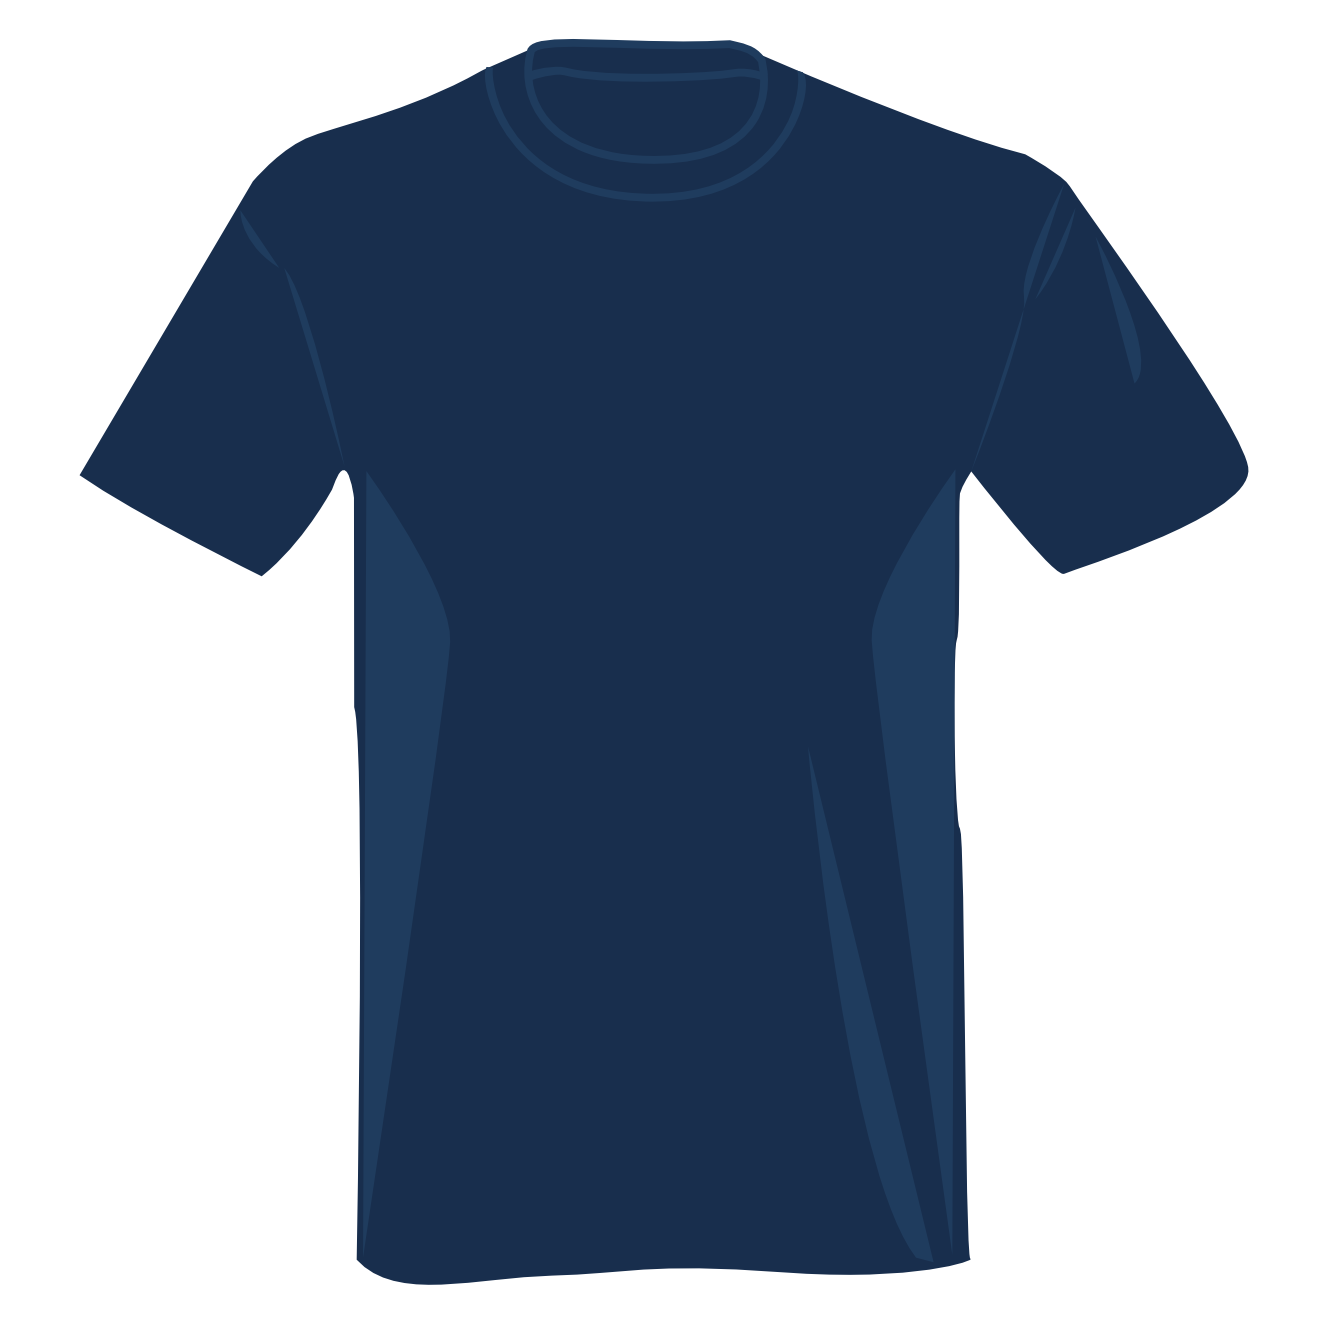 T Shirts Clip Art - ClipArt Best